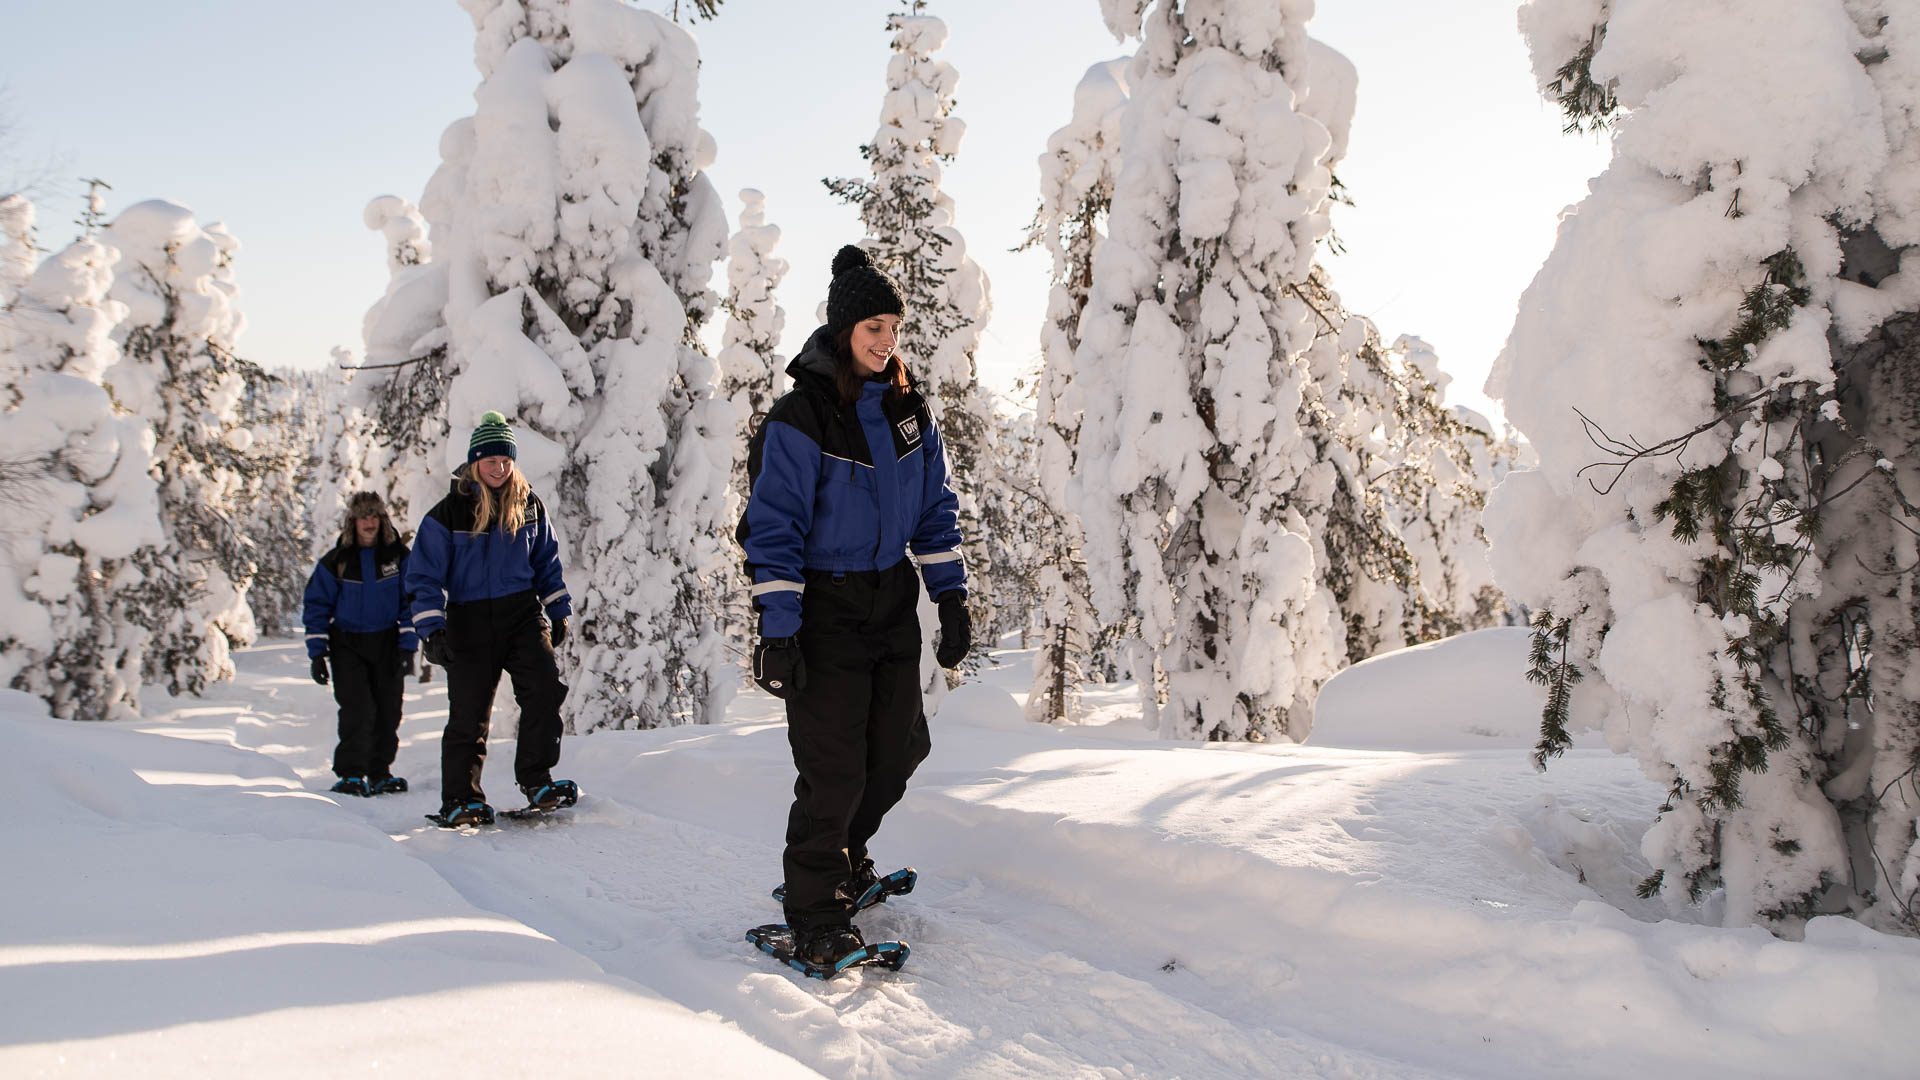 Activities / snowshoe - fatbike - ski tours / Levi, Villi Pohjola / Wild Nordic Finland @wildnordicfinland